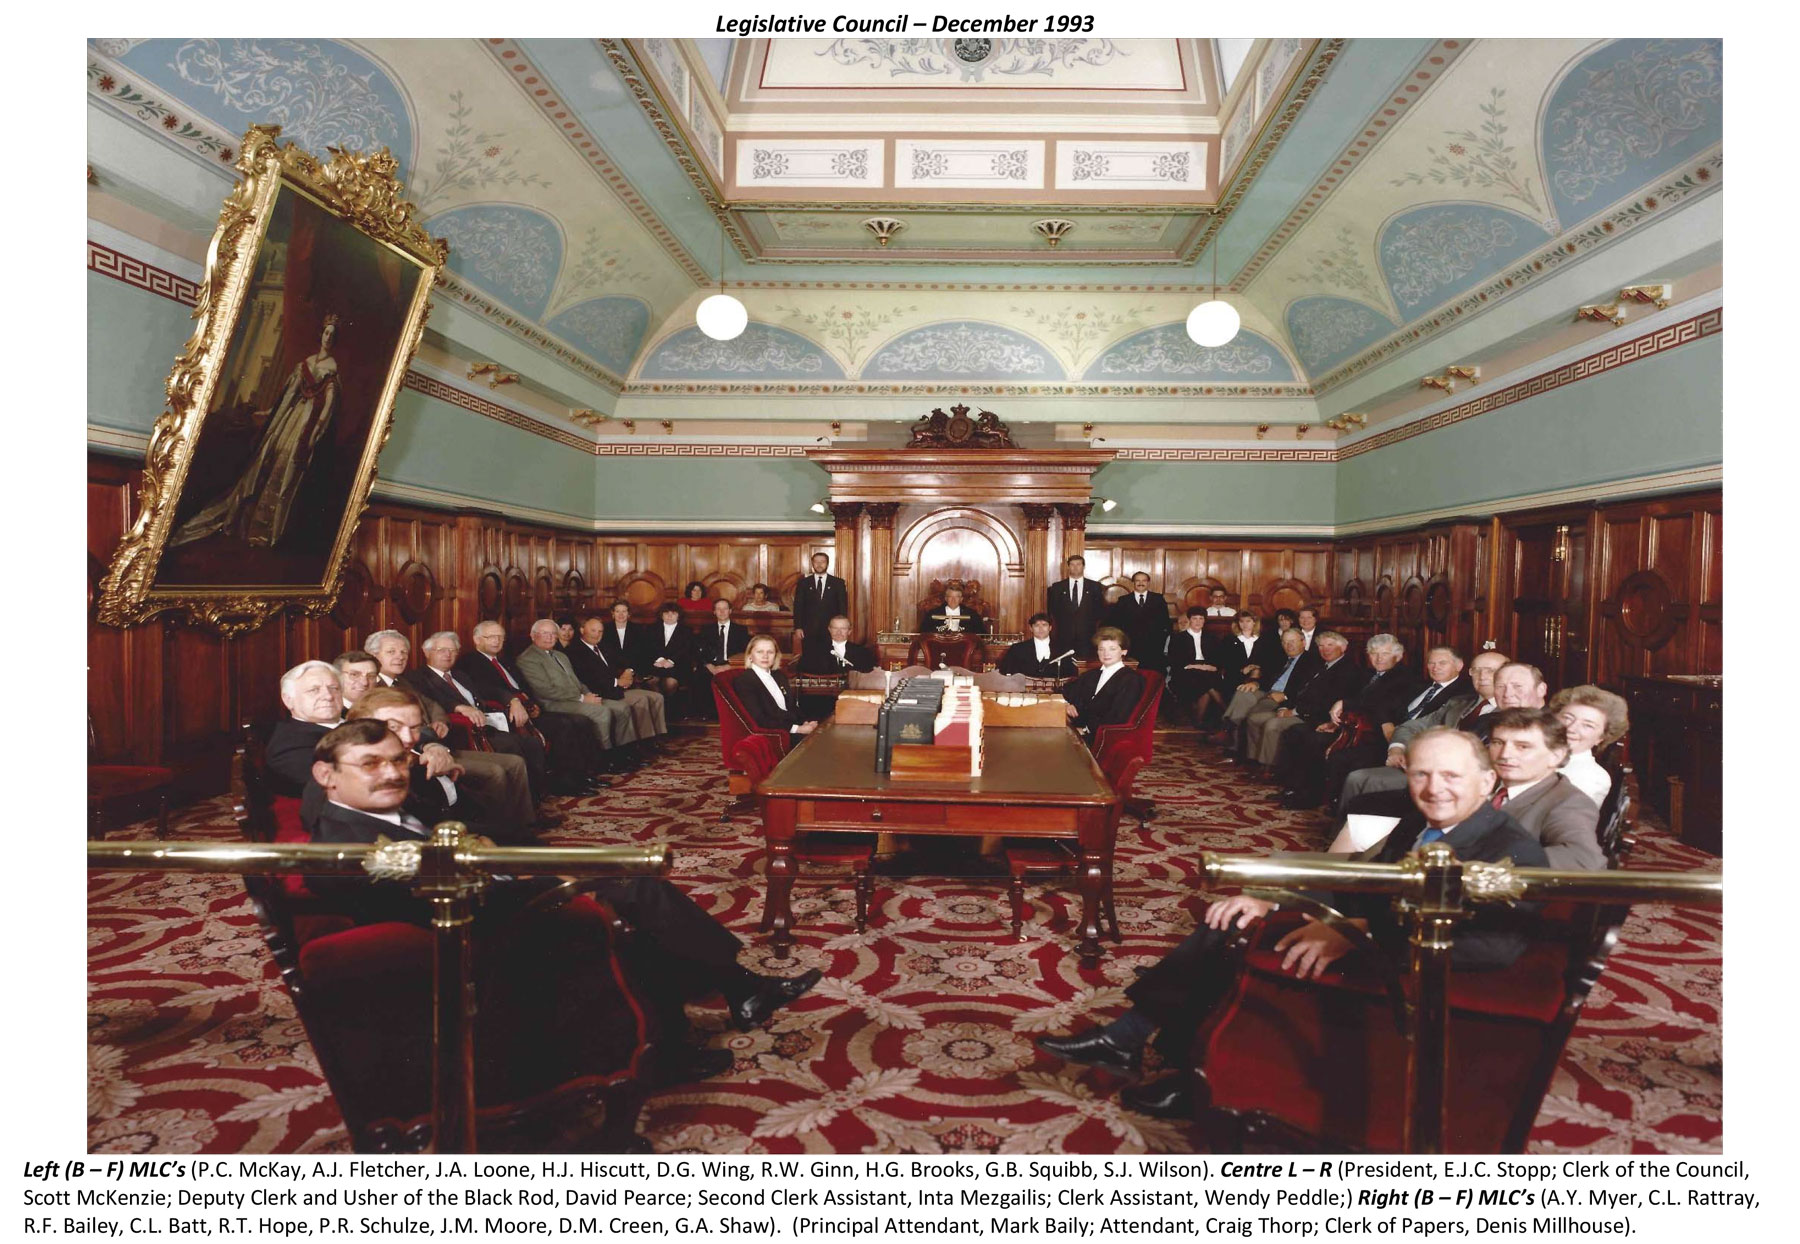 Legislative Council - December 1993